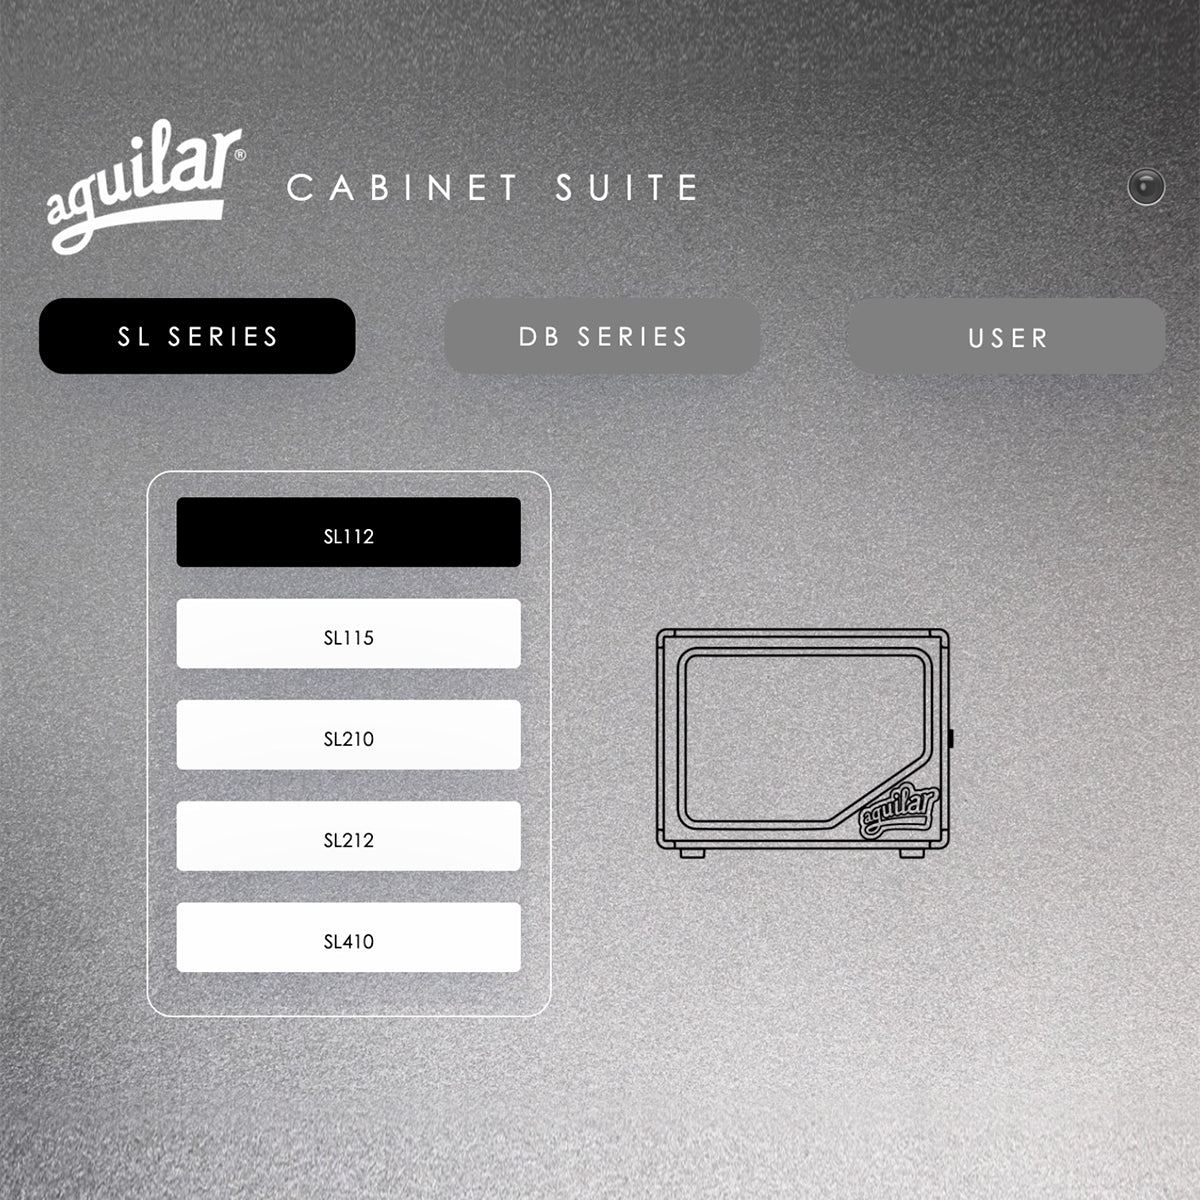 Aguilar Cabinet Suite web design